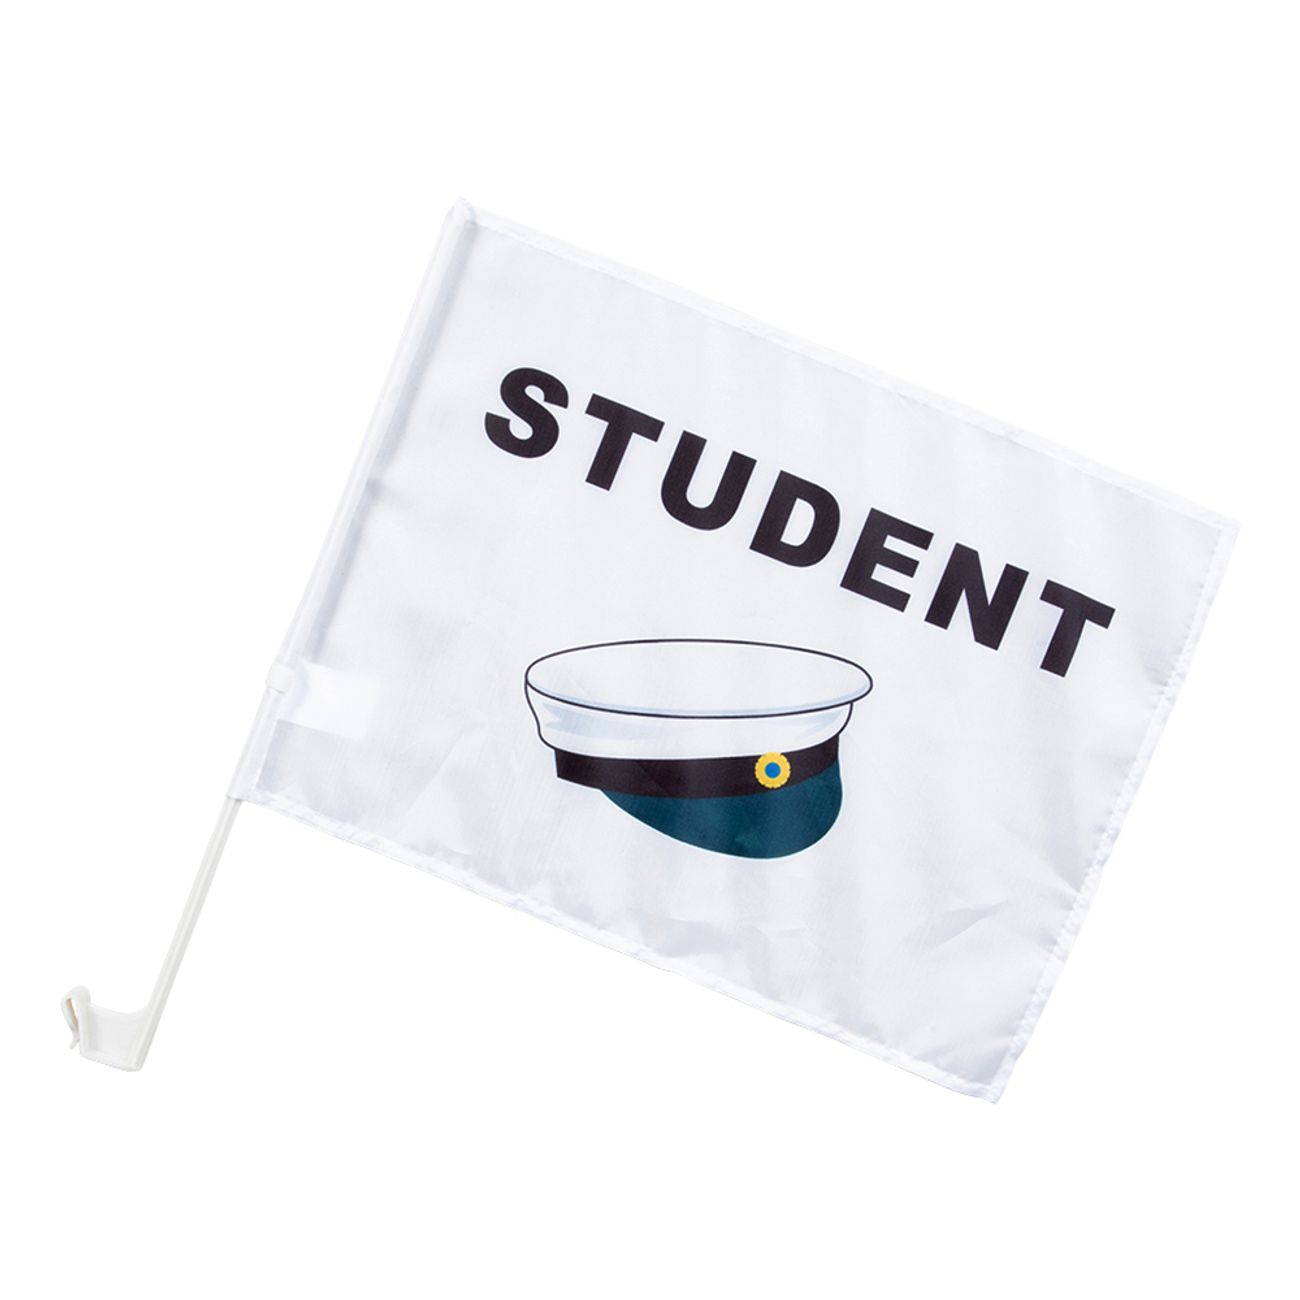 bilflaggor-student-101464-1